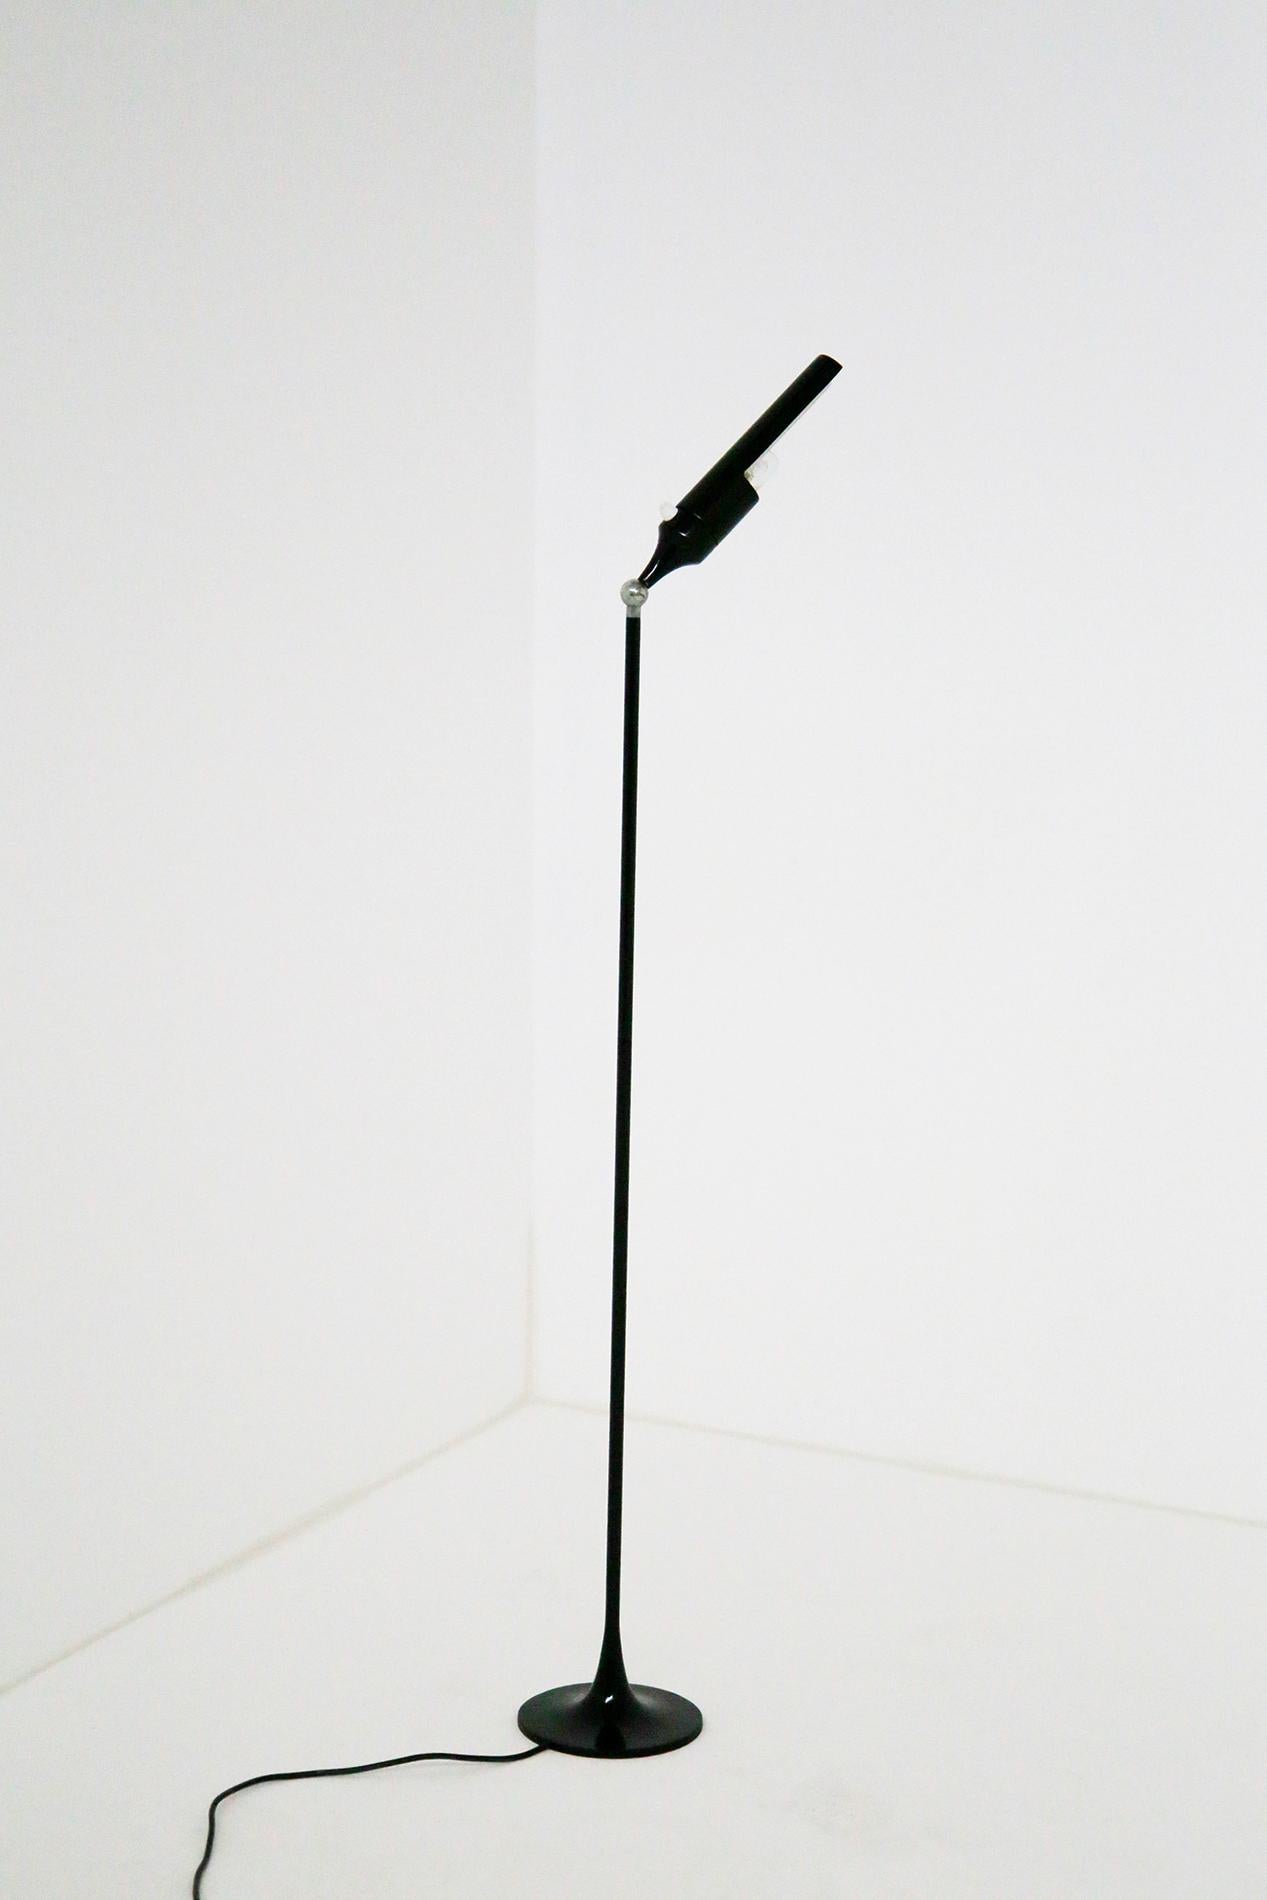 Italian Gino Sarfatti Midcentury Black Floor Lamp for Arteluce, Model No. 1086, 1961